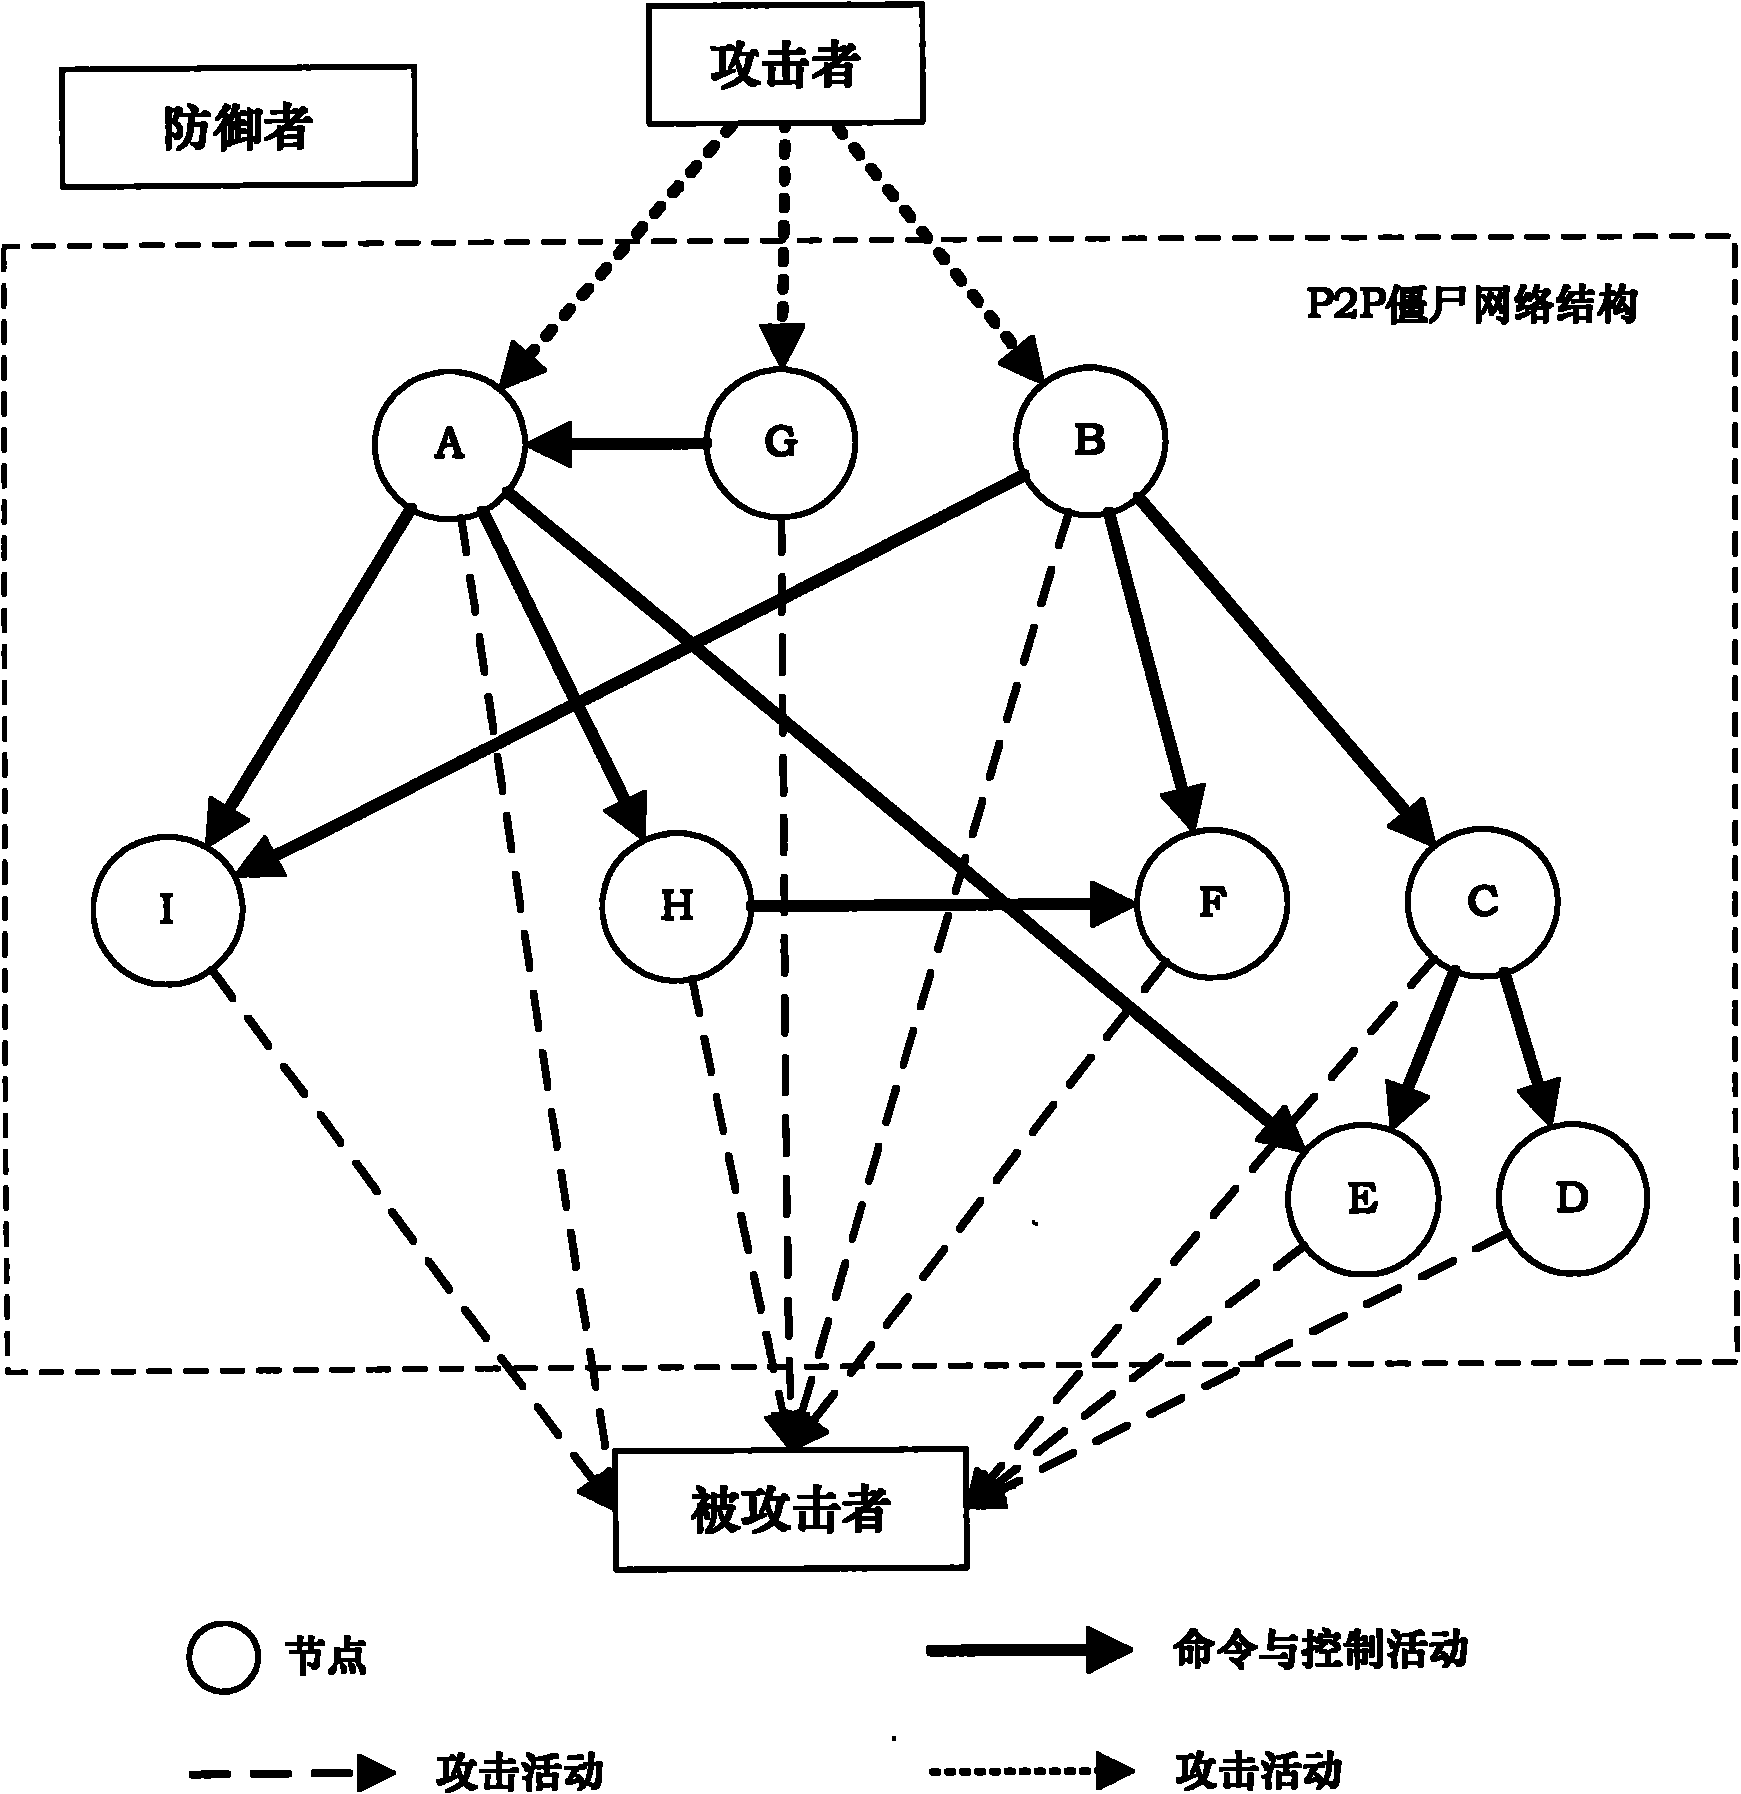 Method for detecting P2P botnet structure based on network flow clustering